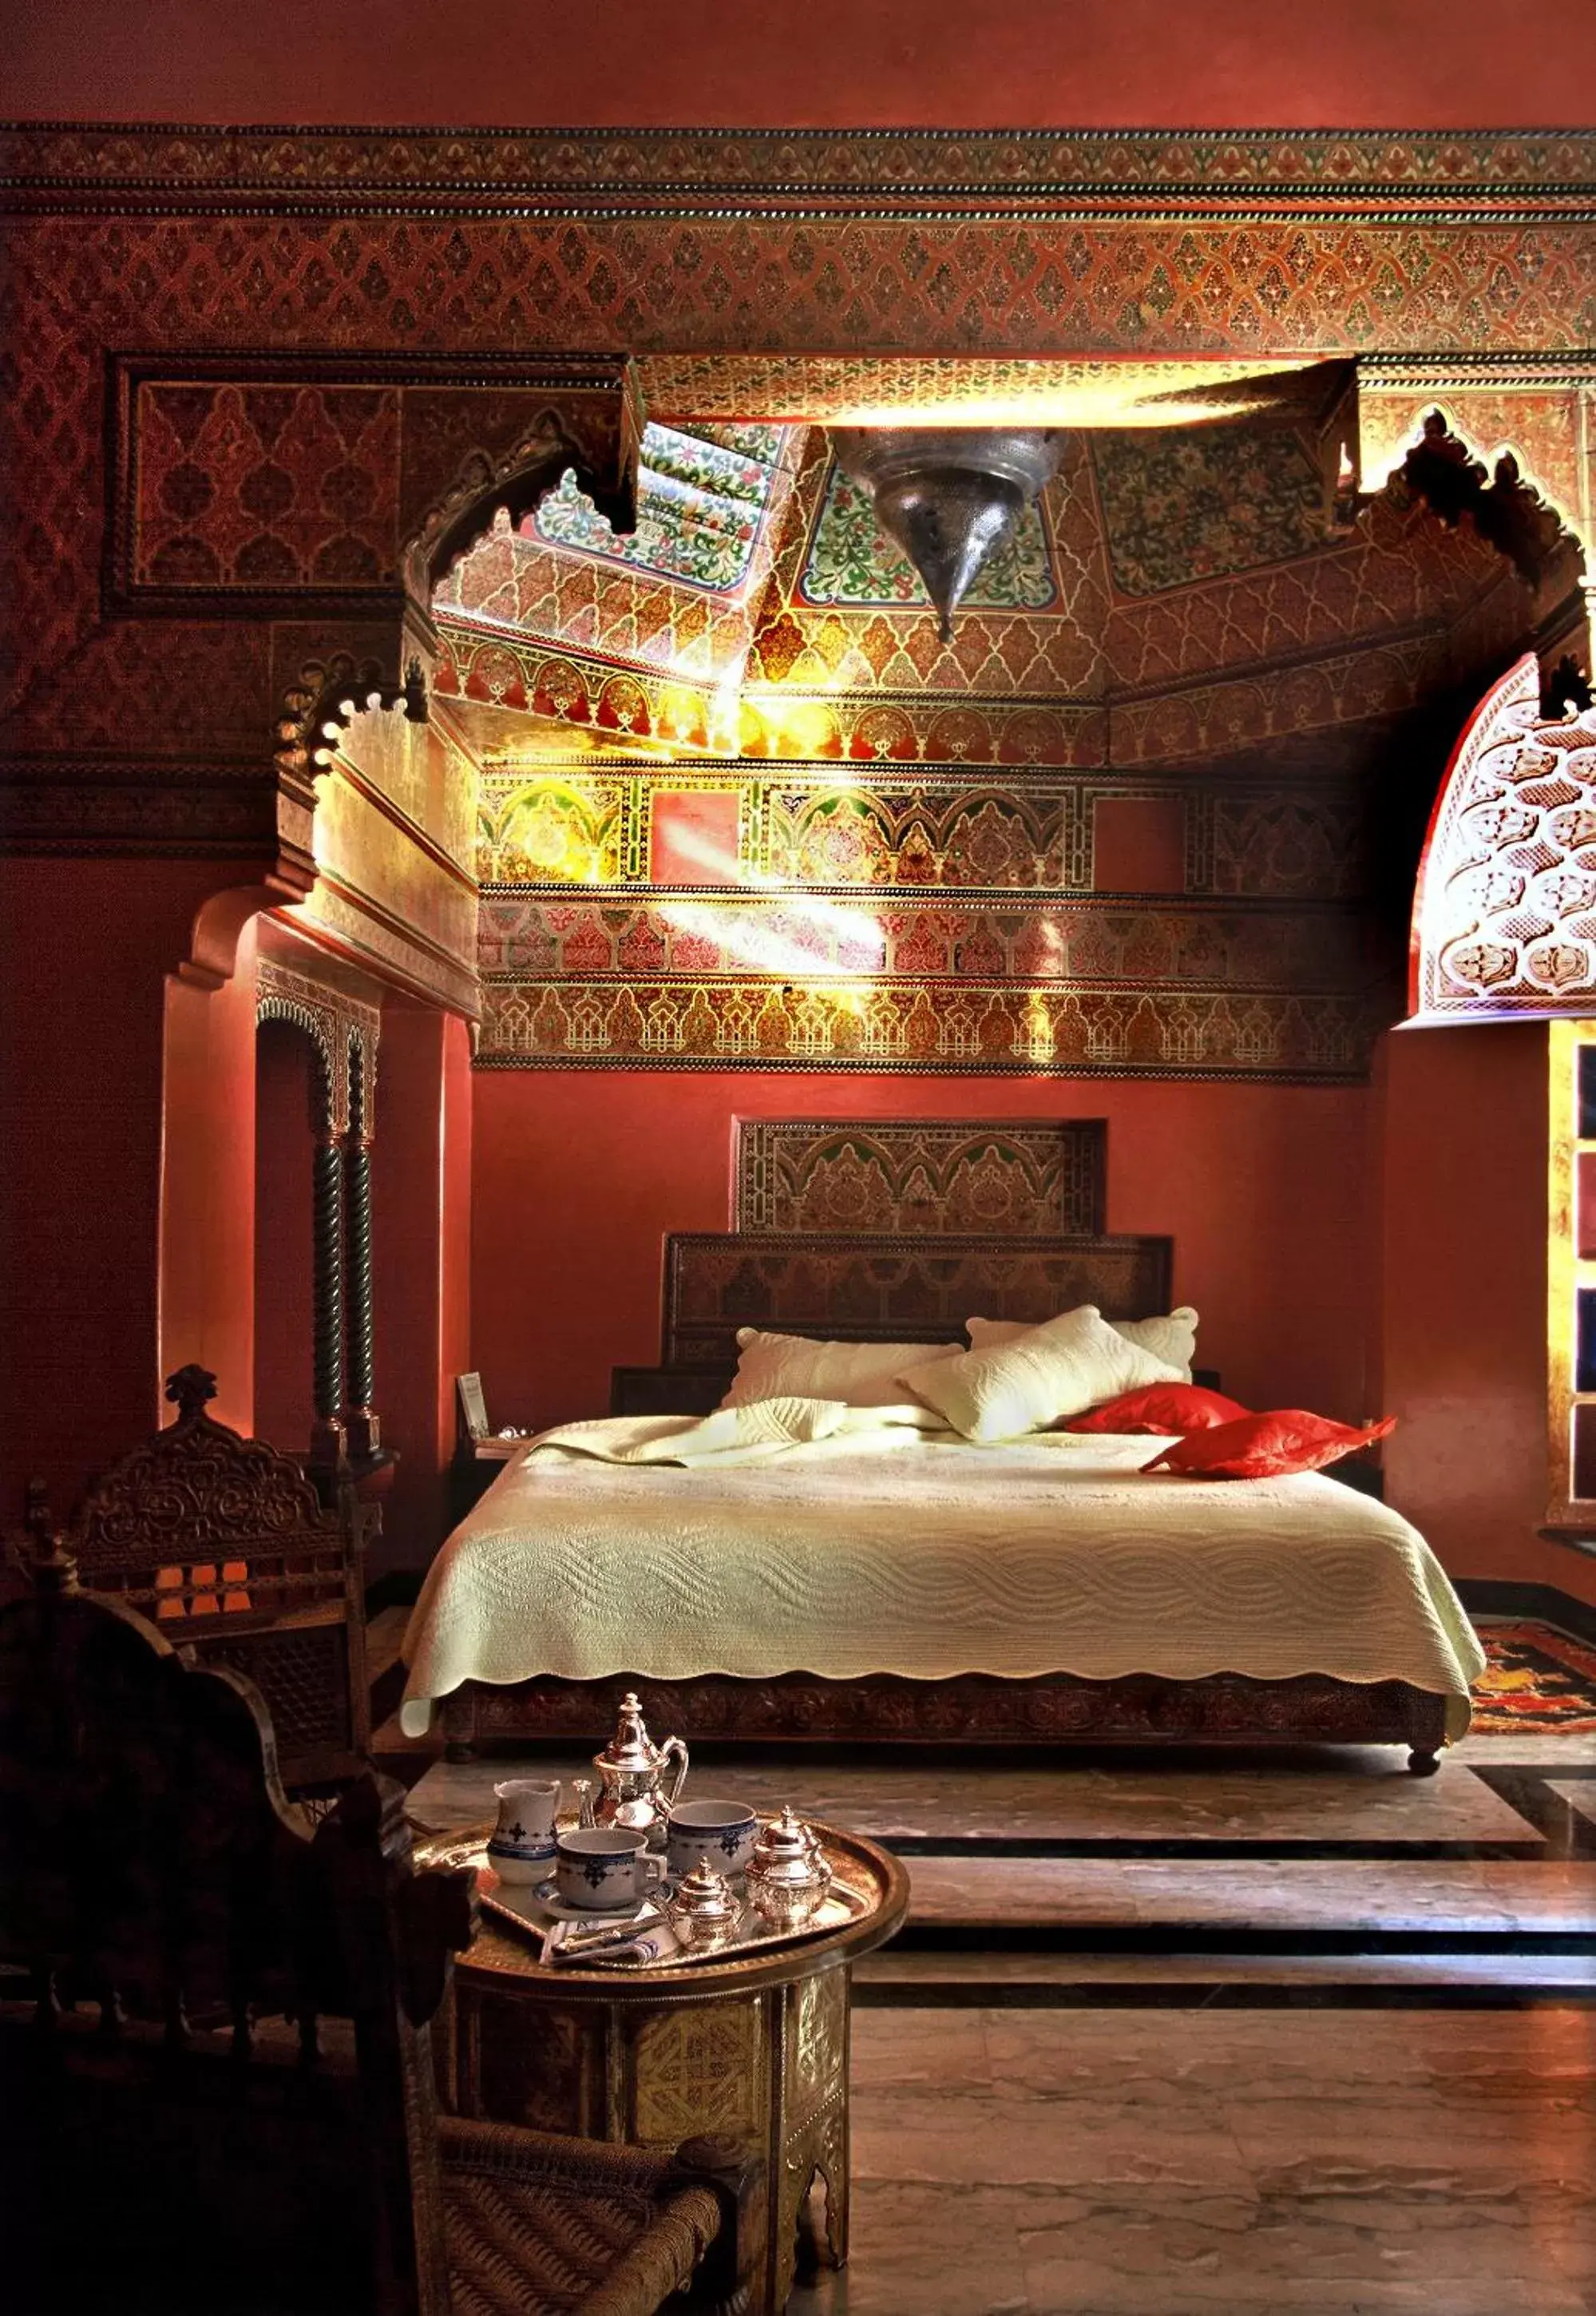 Bed in La Sultana Marrakech